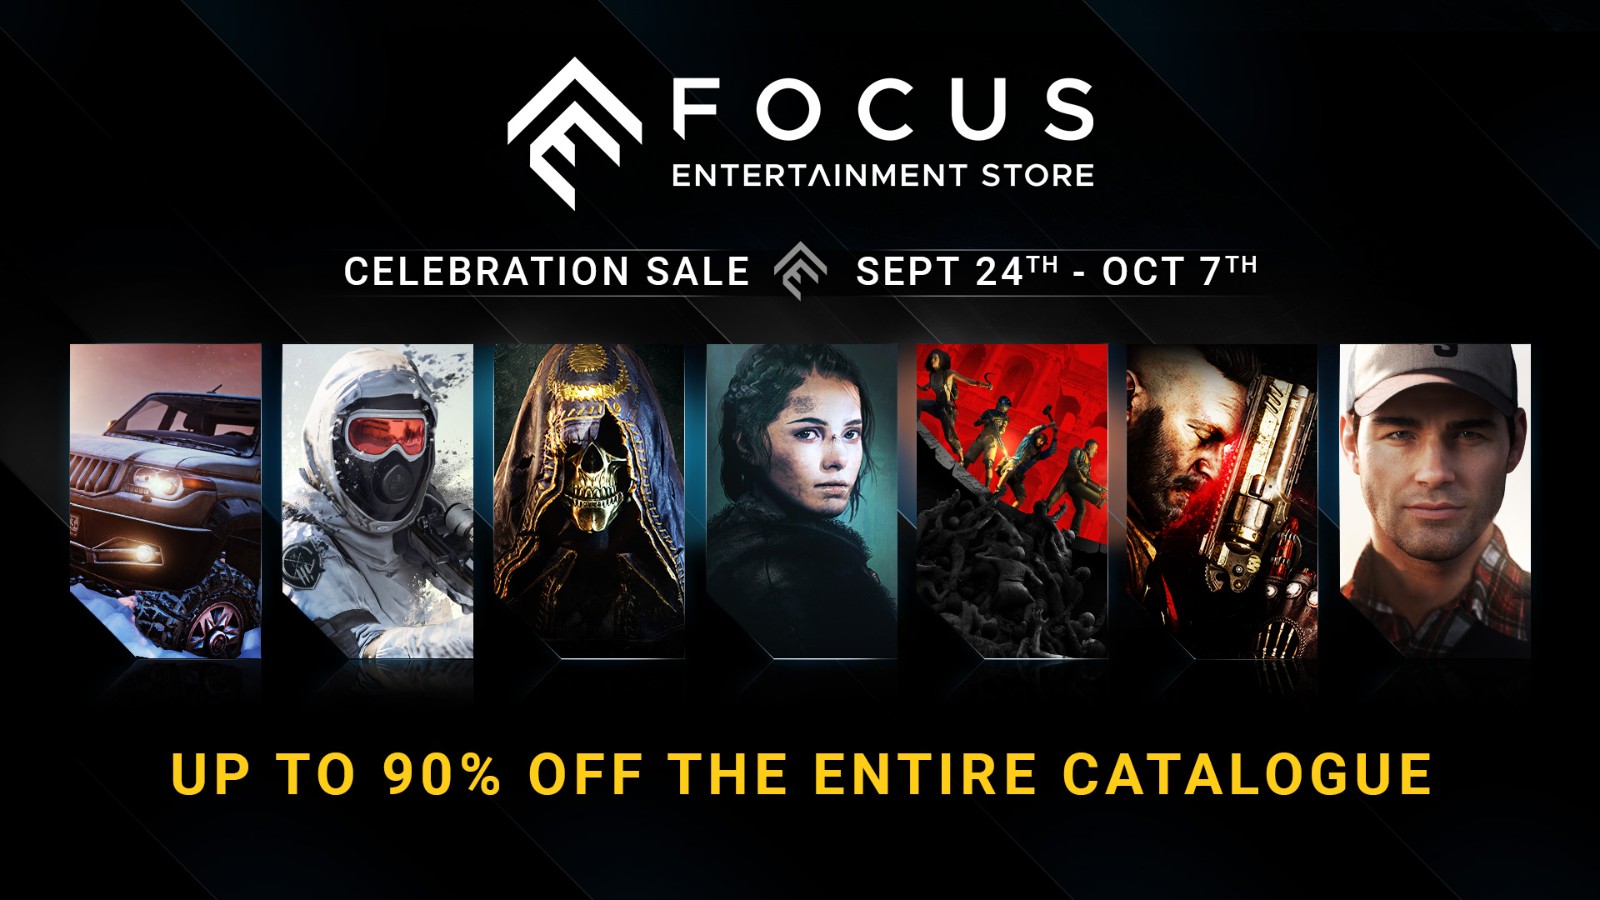 Focus娱乐上线了自己的在线游戏商城